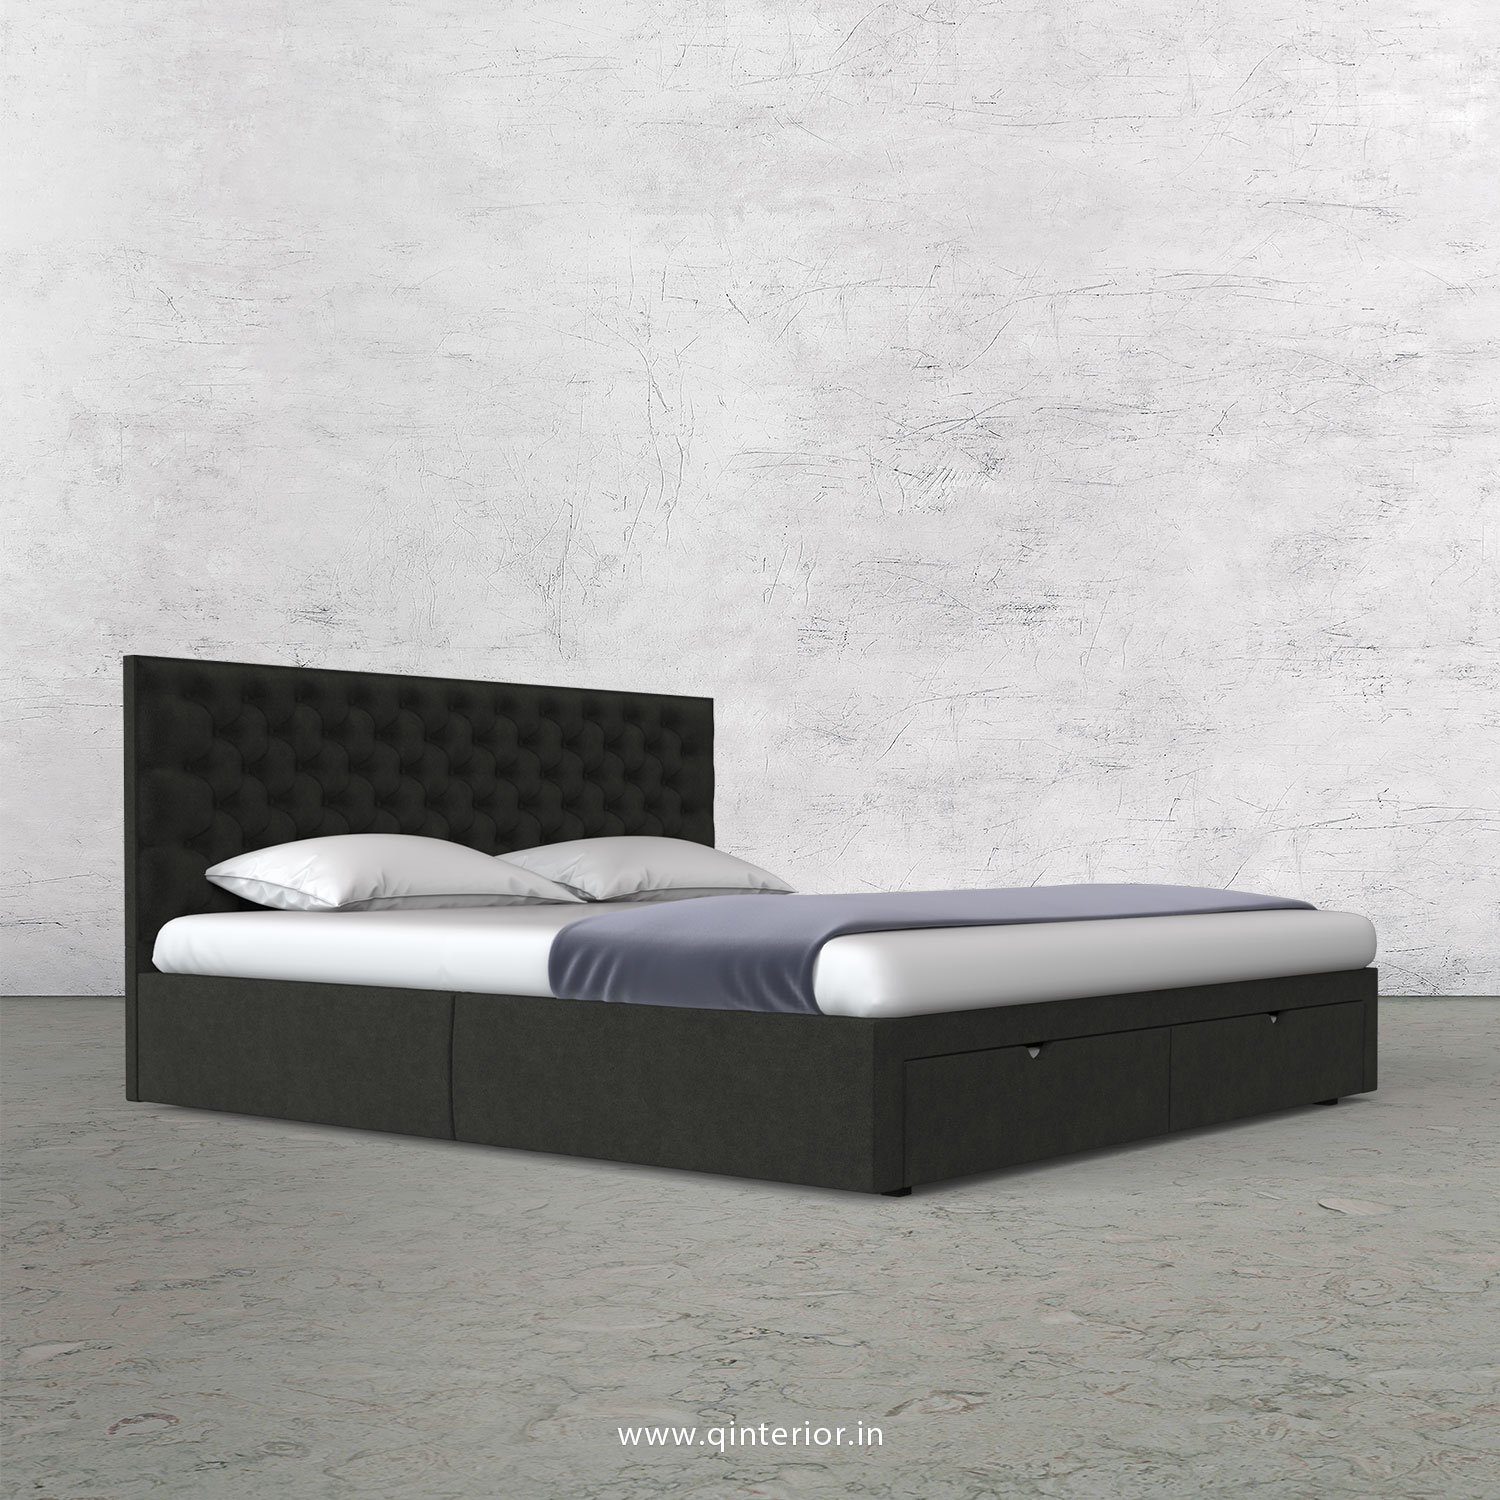 Orion King Size Storage Bed in Velvet Fabric - KBD001 VL07